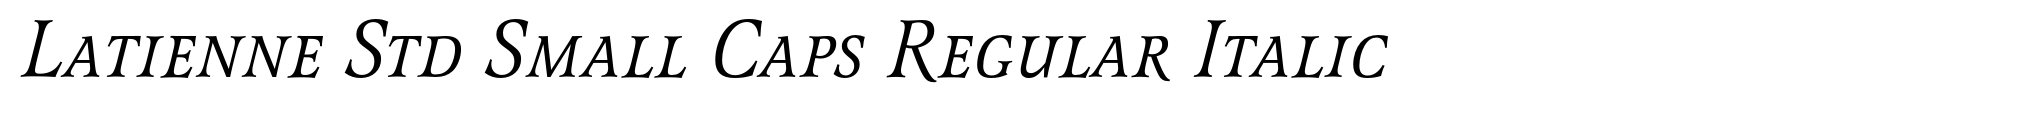 Latienne Std Small Caps Regular Italic image